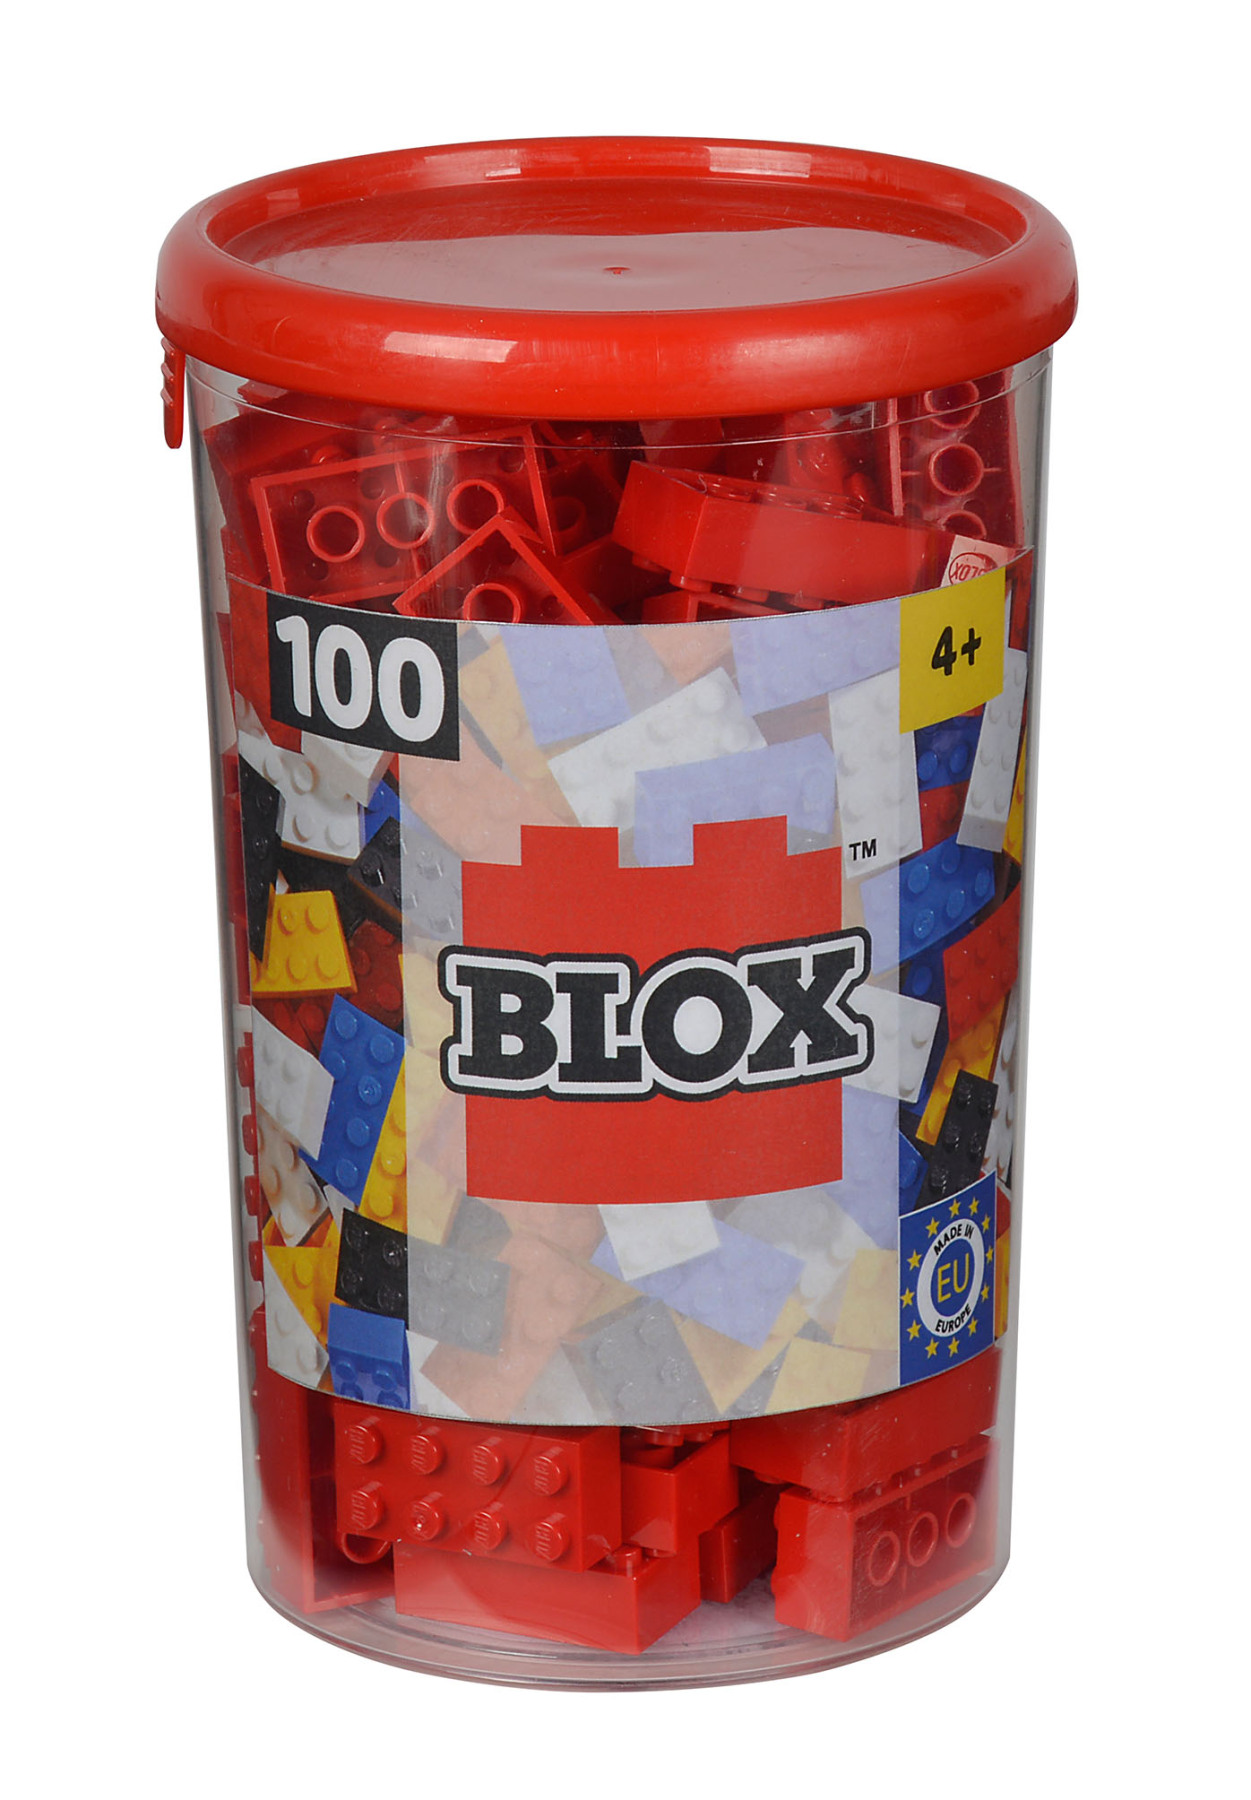 Simba Toys Bausteine Blox 100 rote 8er Steine in Dose